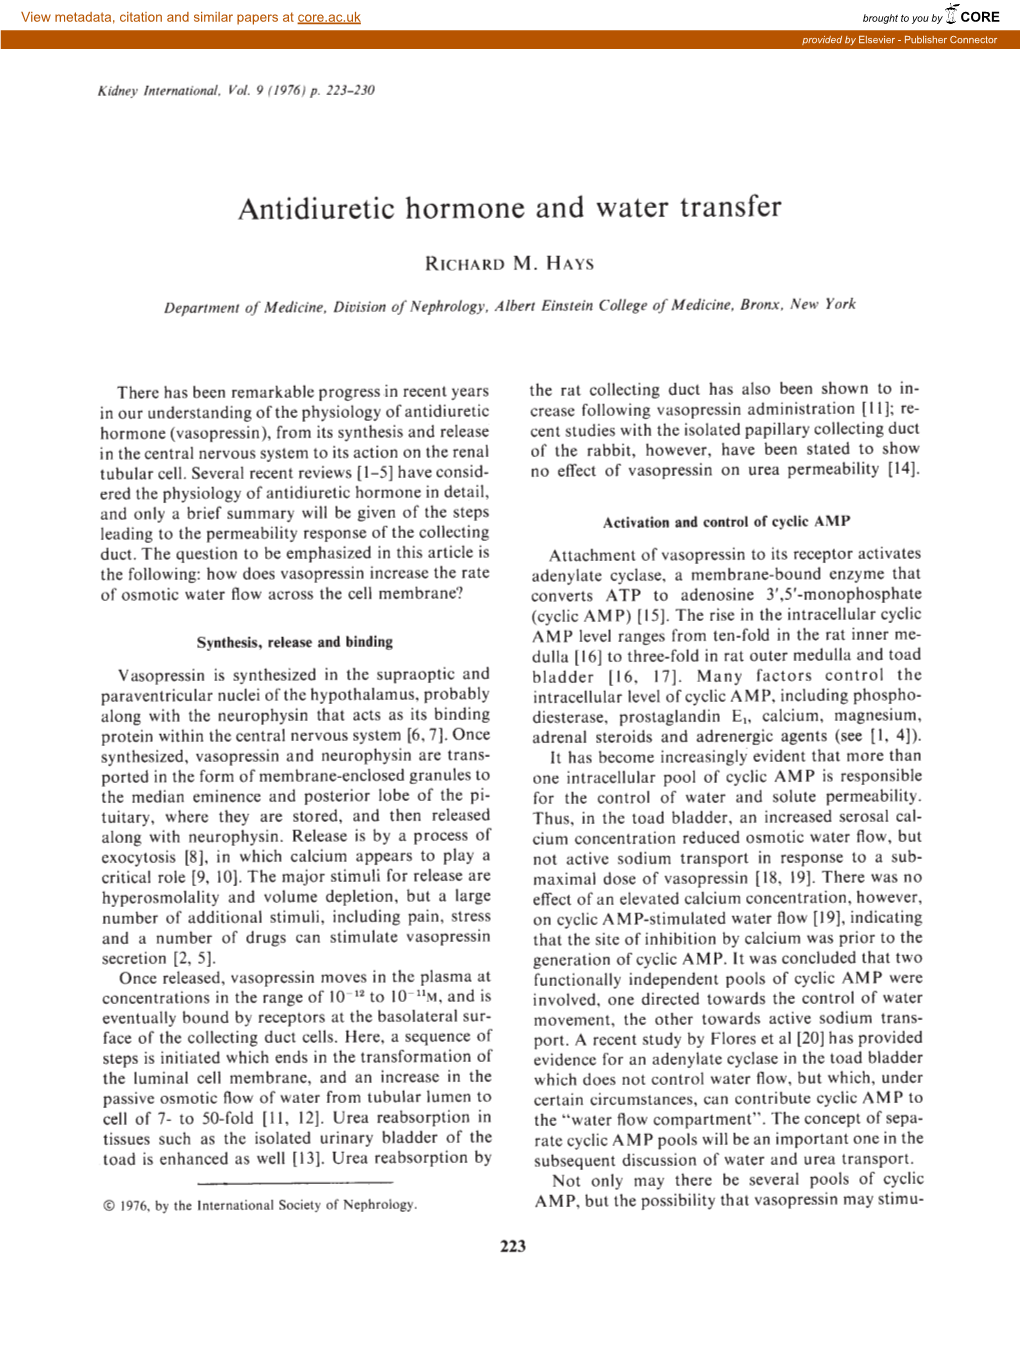 Antidiuretic Hormone and Water Transfer